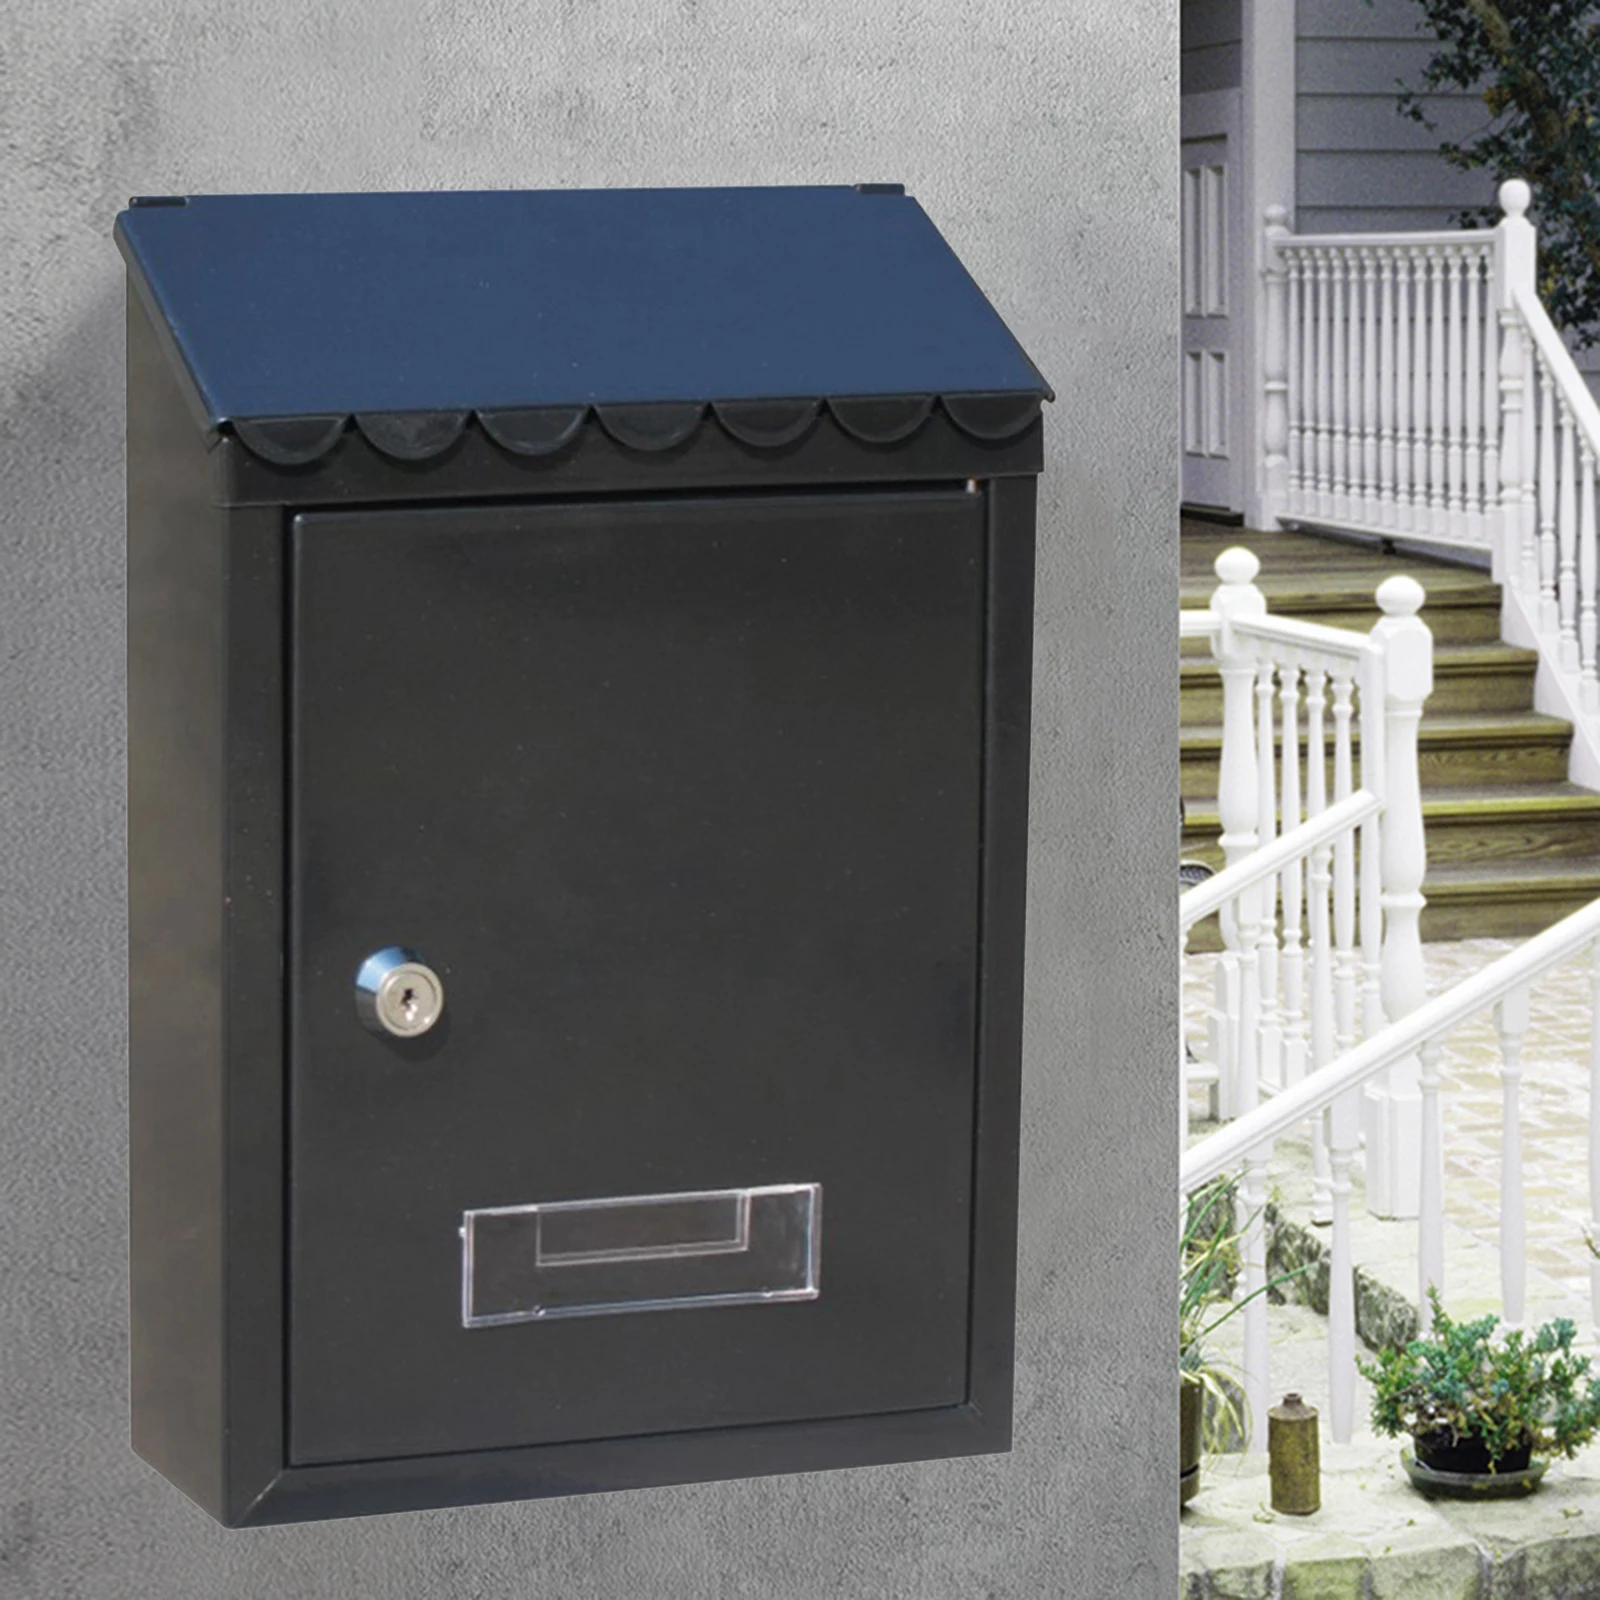 Metal Mailbox Wall Mounted Secure Mail Box 2 Keys Office Decorative Drop Box